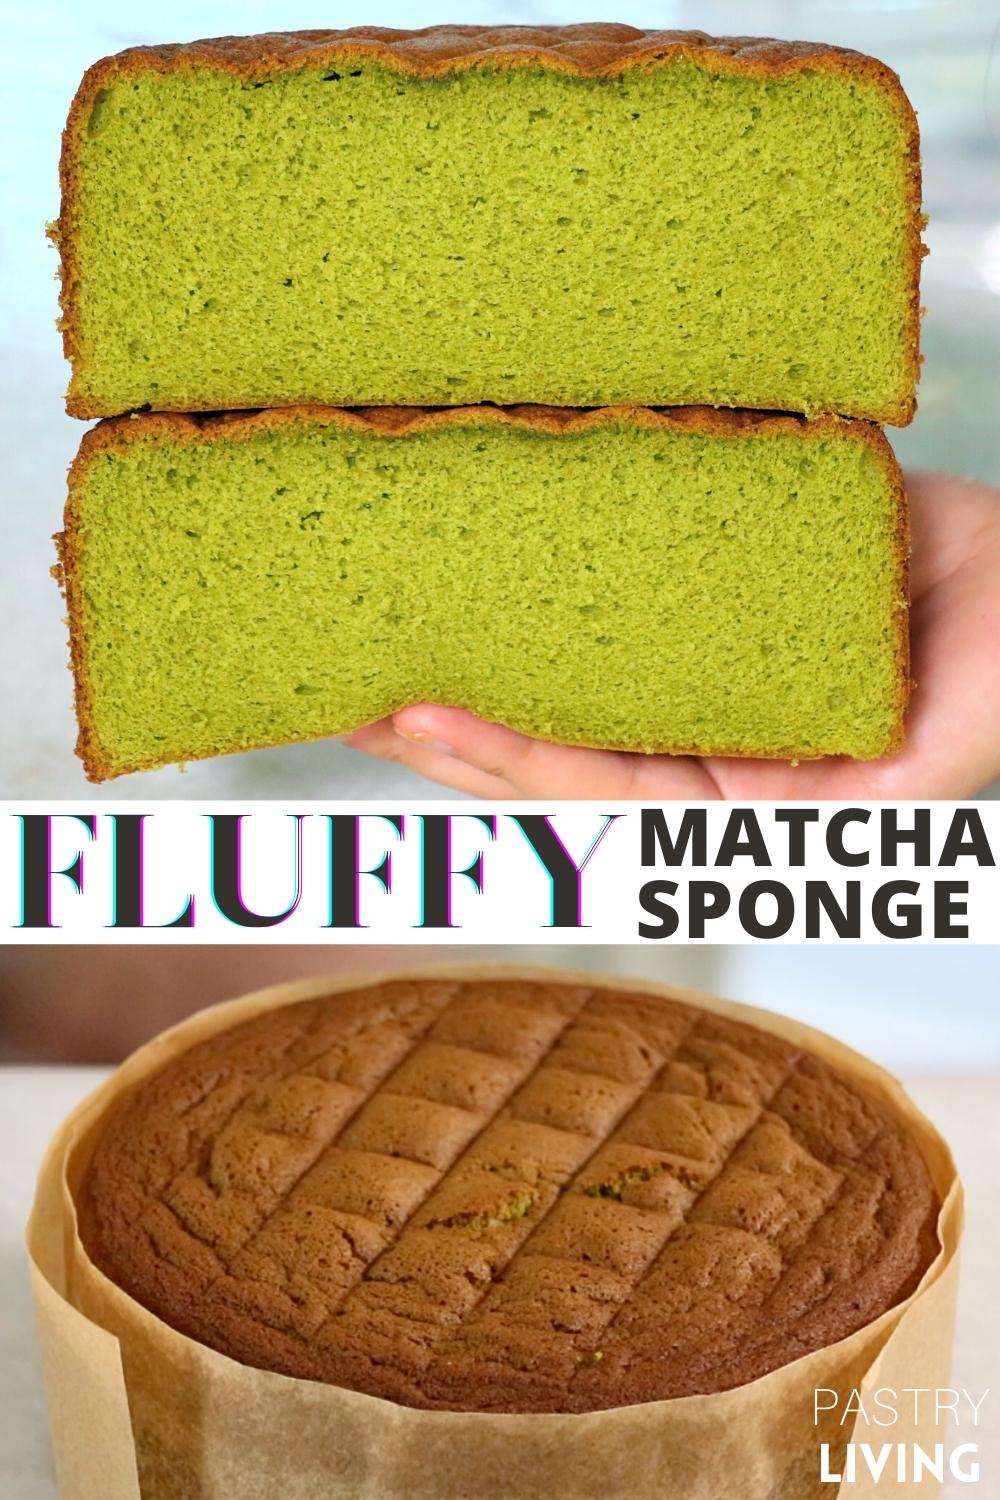 fluffy matcha sponge cake cut in half and a whole cake